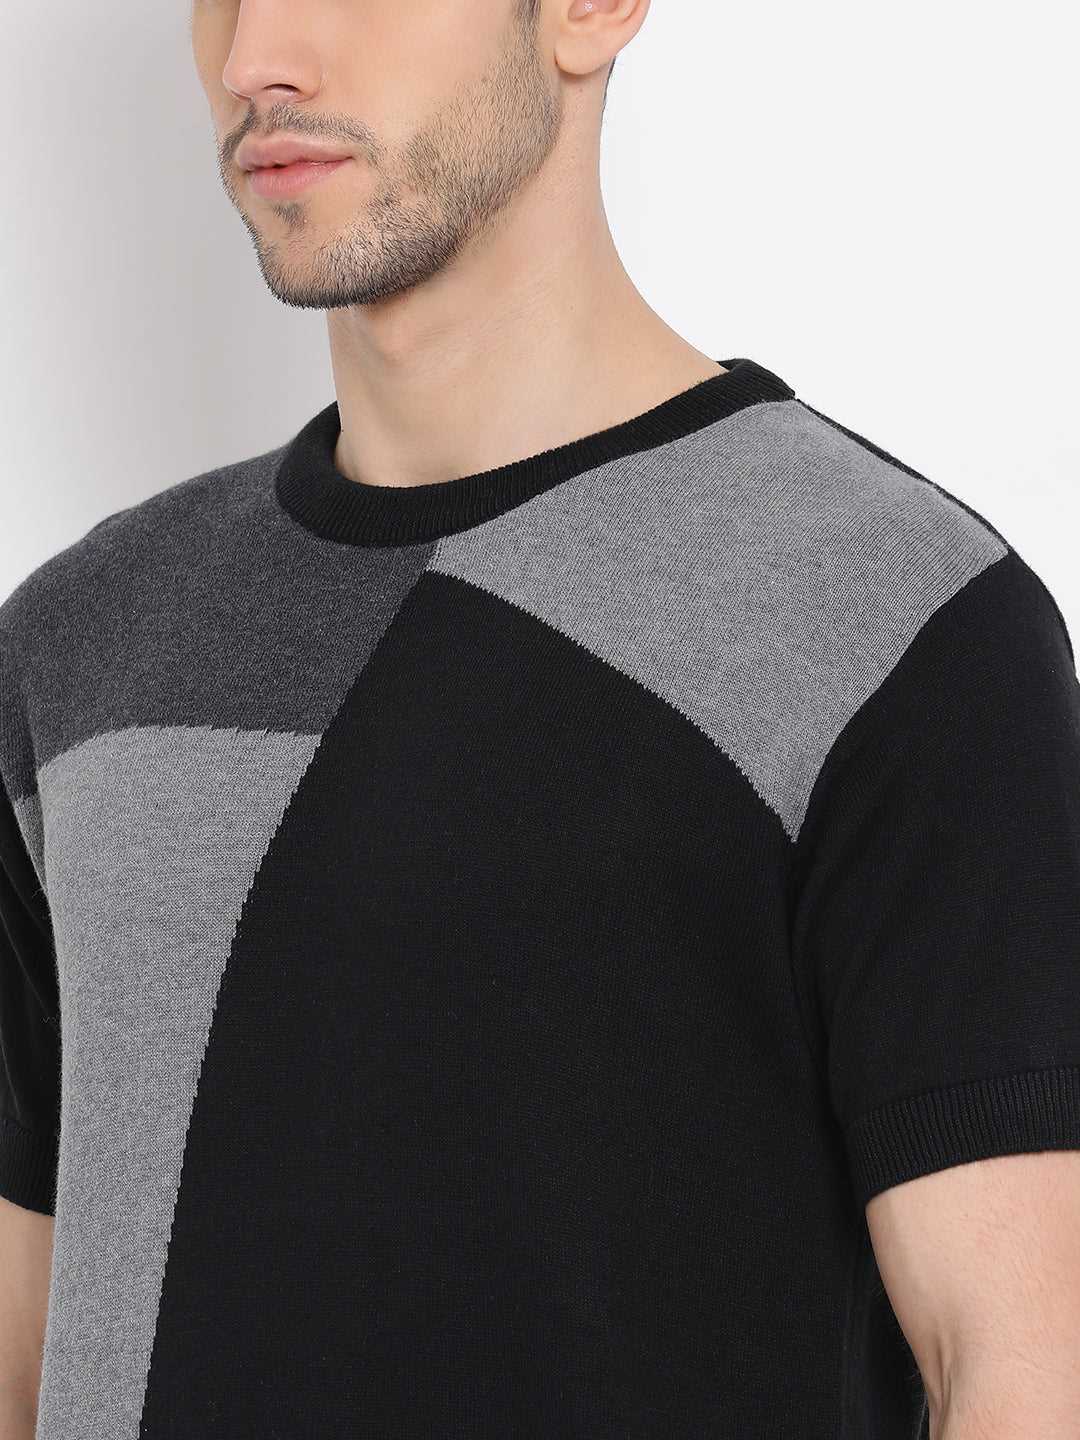 Cobb Black Striped Round Neck T-Shirt